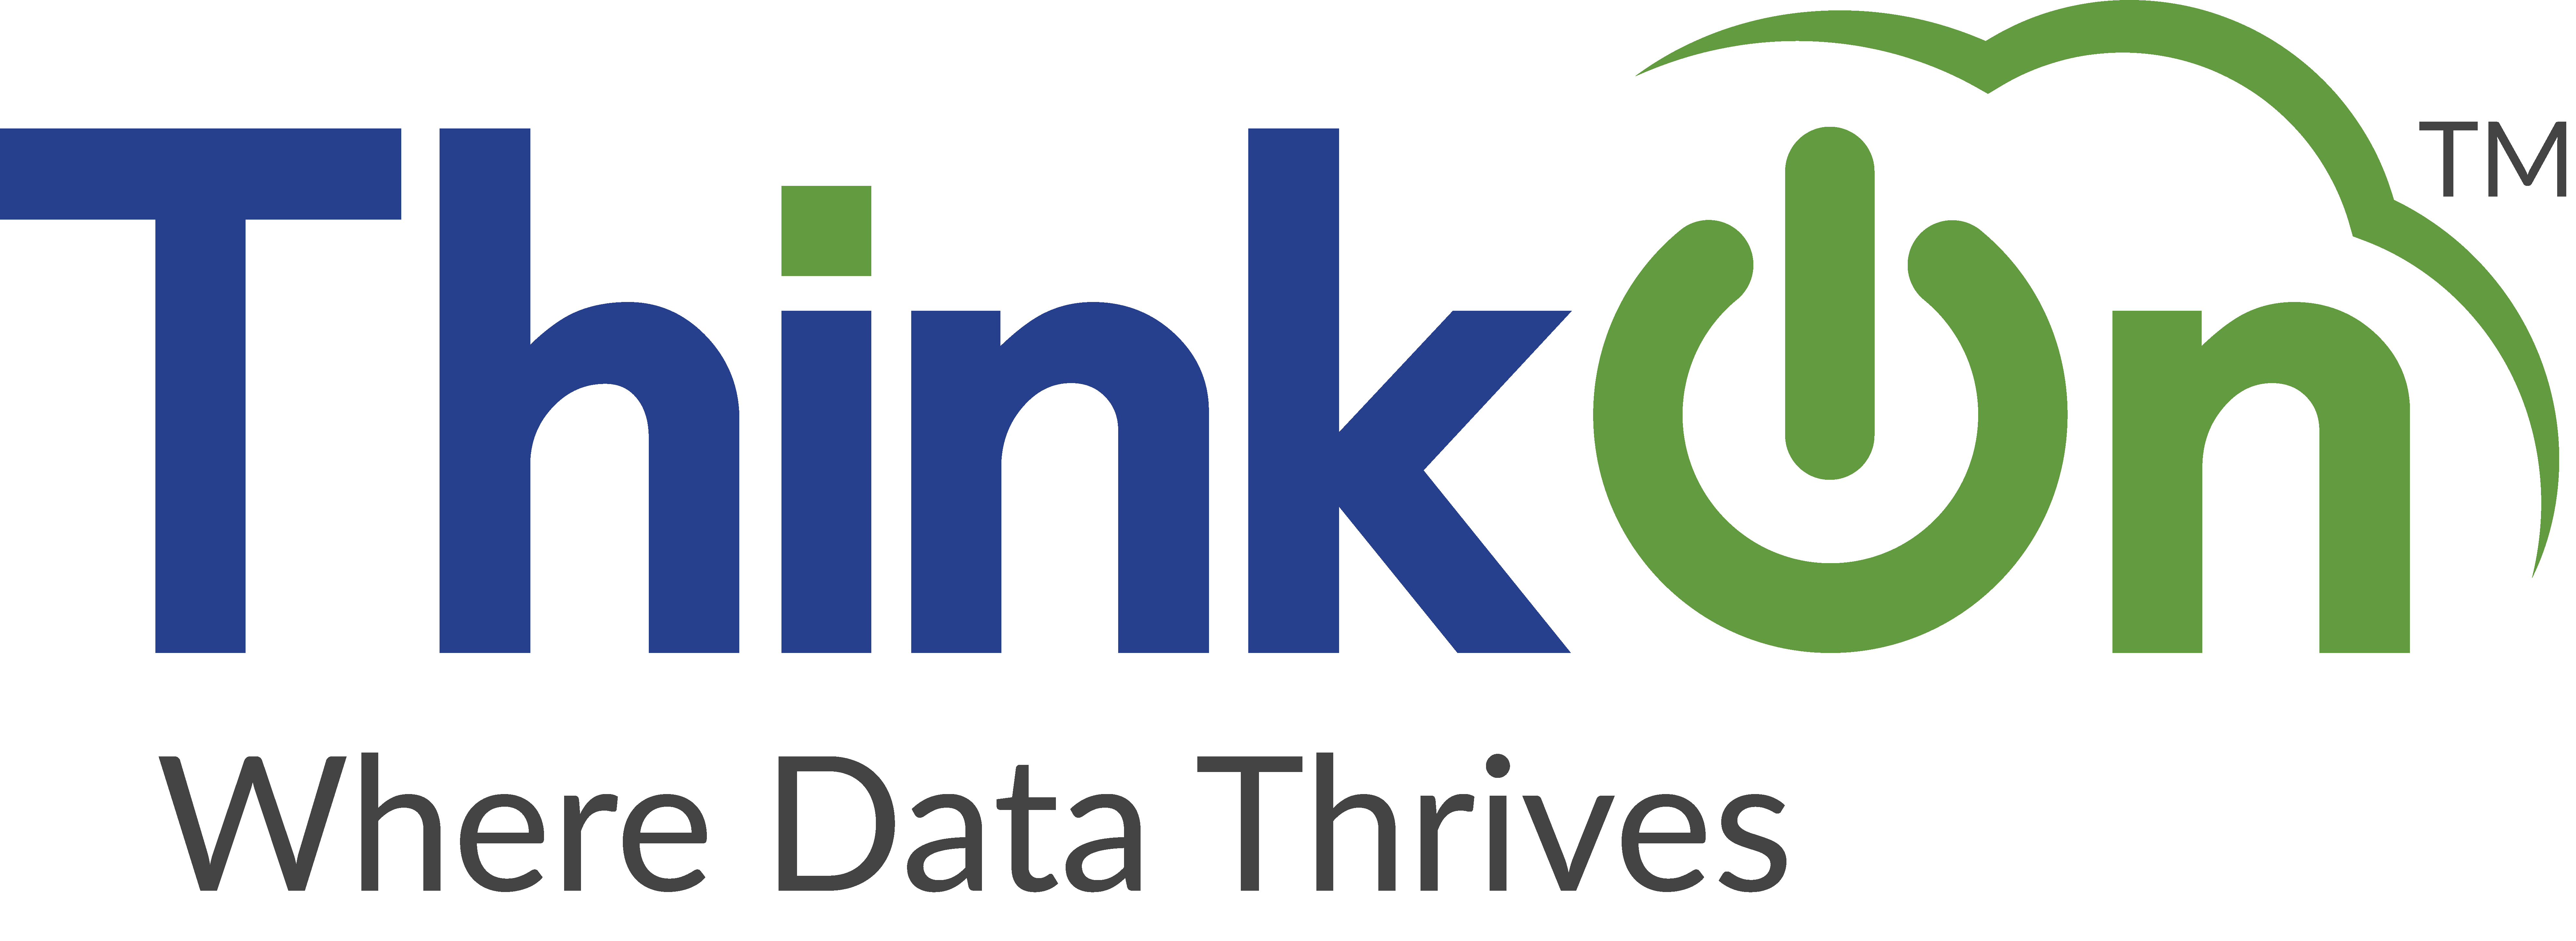 ThinkOn Logo - Colour - Slogan- Transparent.png